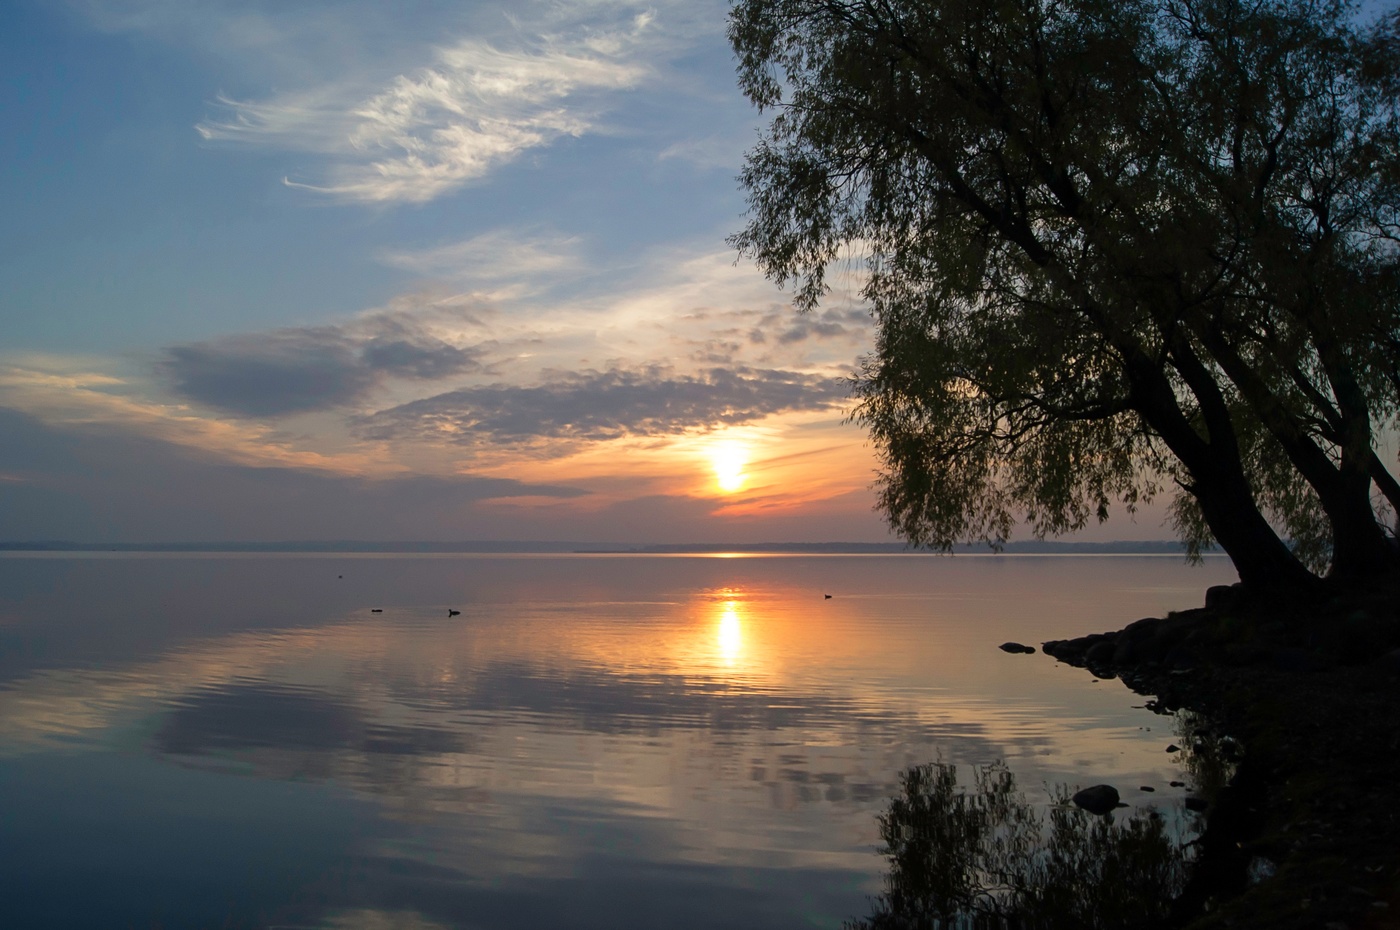 Тиши тиши тишина. Озеро тишь Калужская область. Желоховское озеро Калужская область. Желохово озеро тишь. Утренняя тишь.